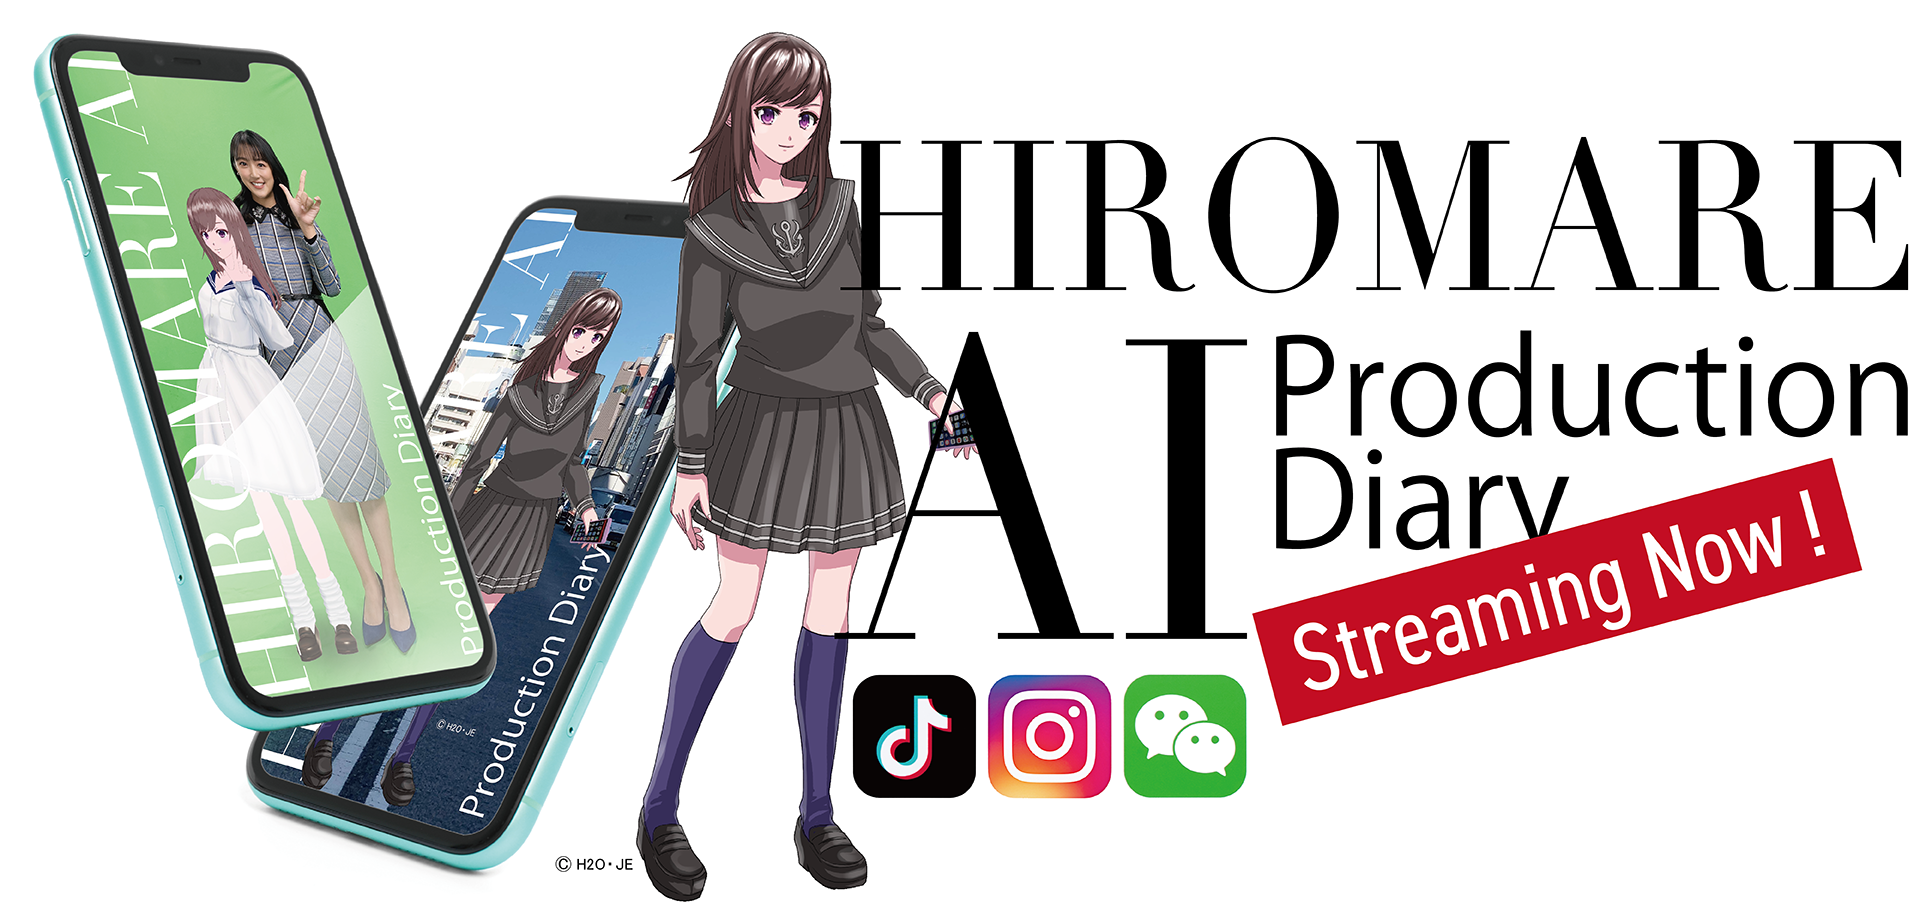 HIROMAE AI Production Diary